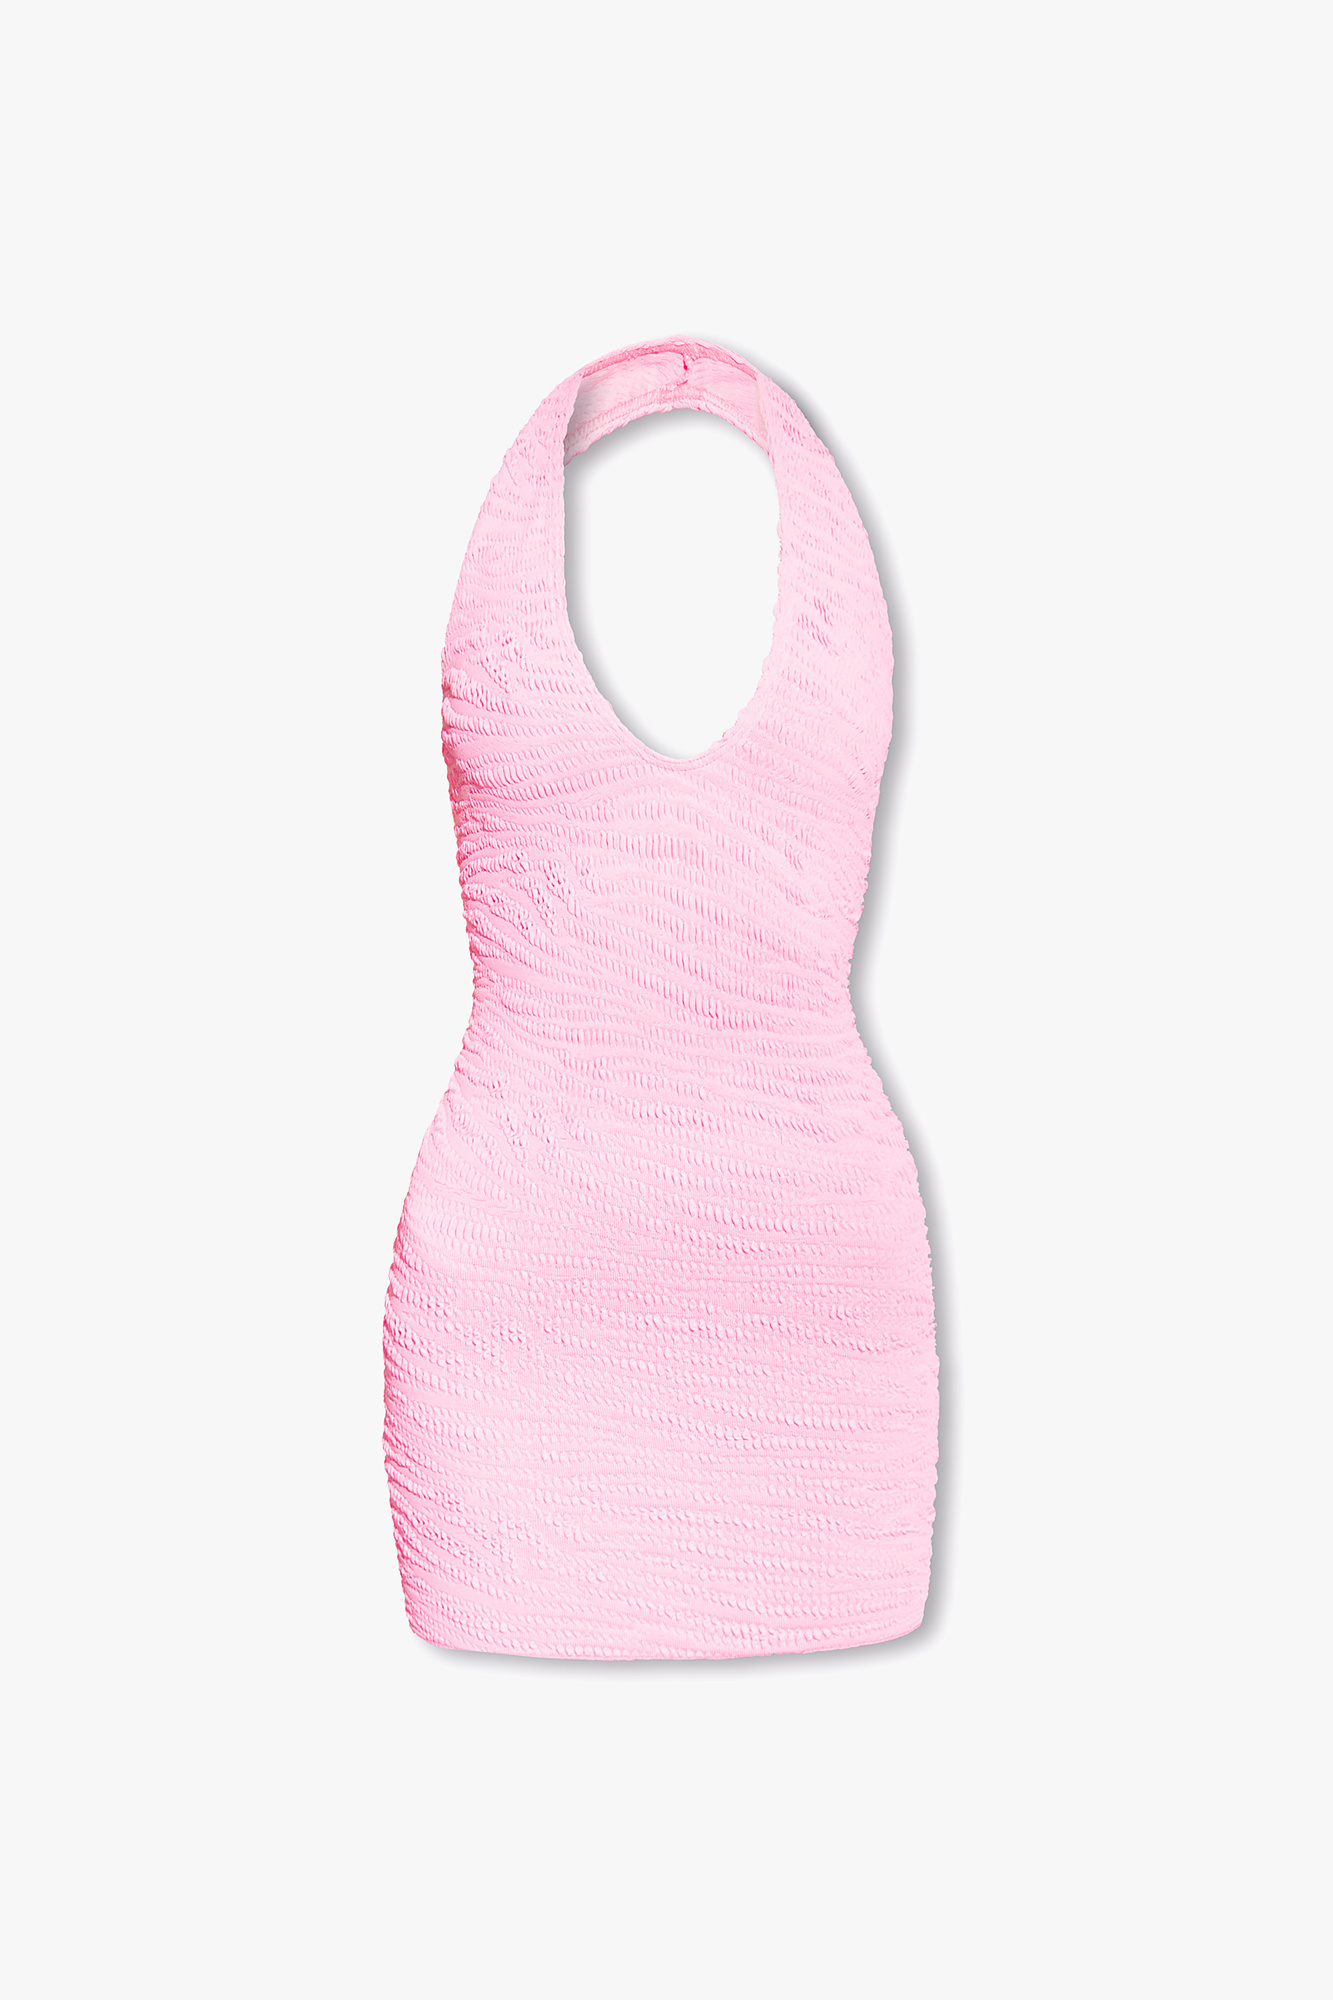 Pink Dress with logo Gucci - Vitkac France